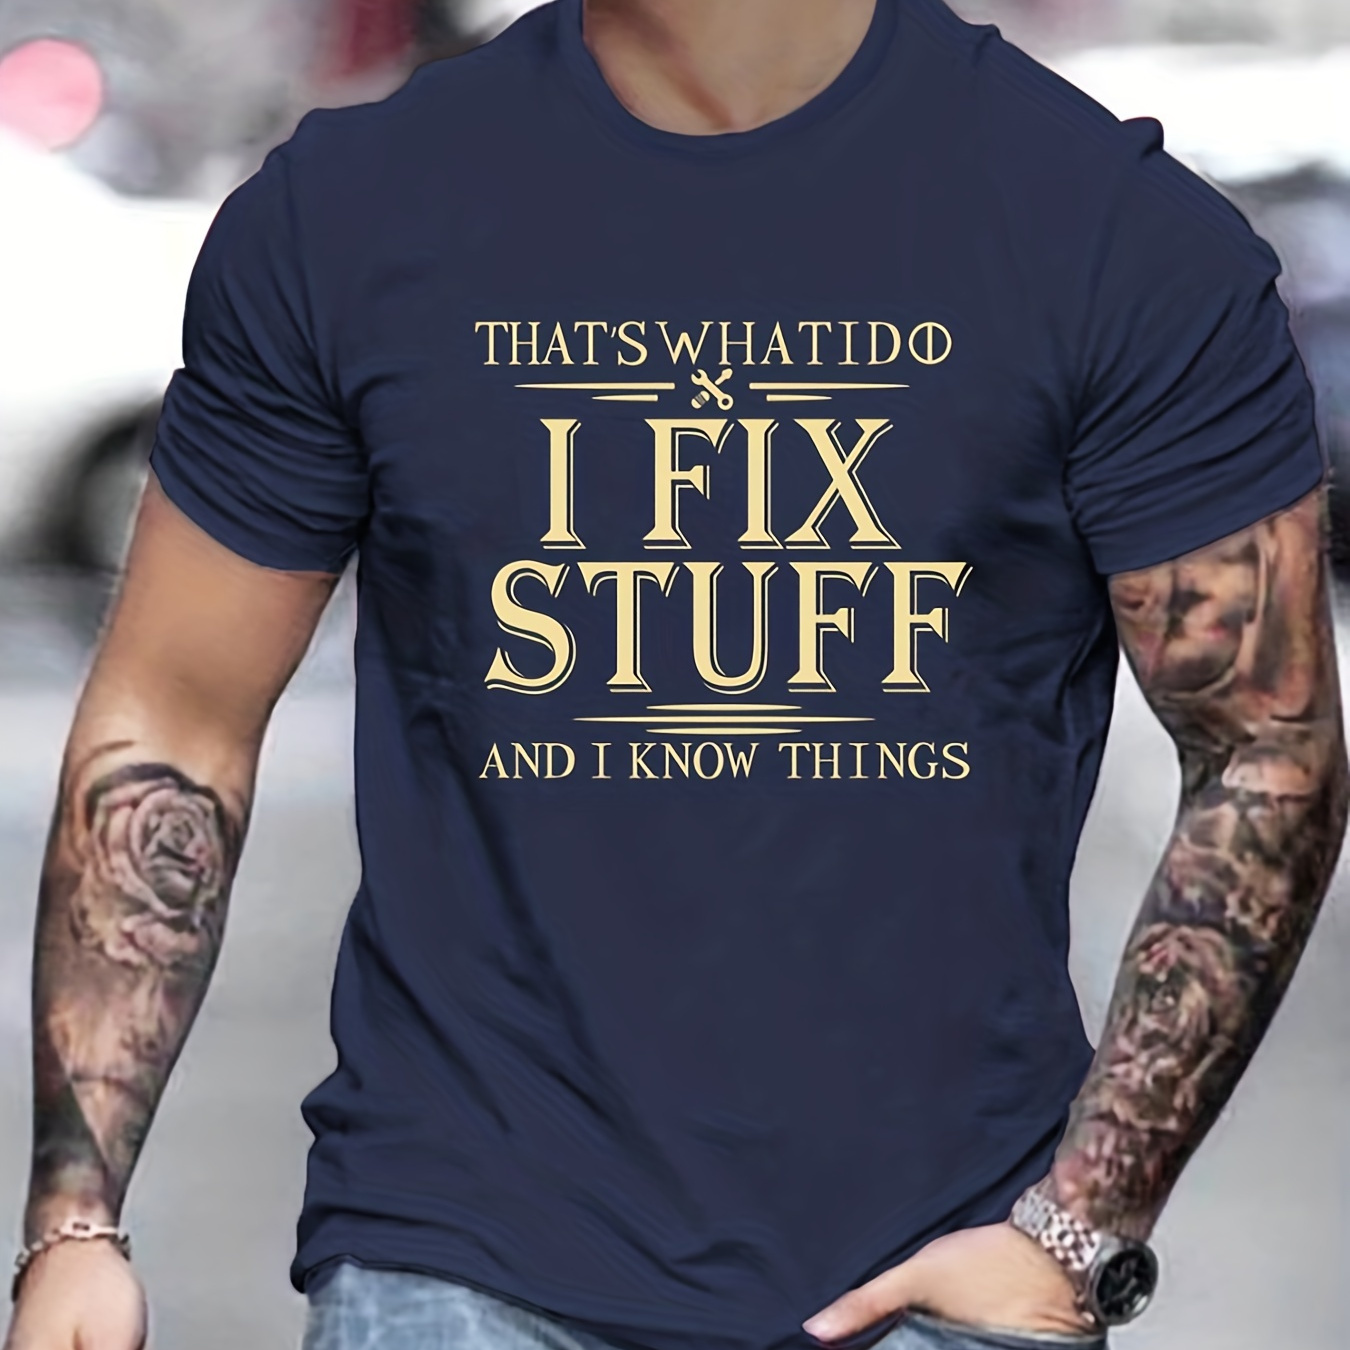 

Men's Casual Crew Neck "i Fix Stuff" Print Short Sleeves T-shirt For Summer